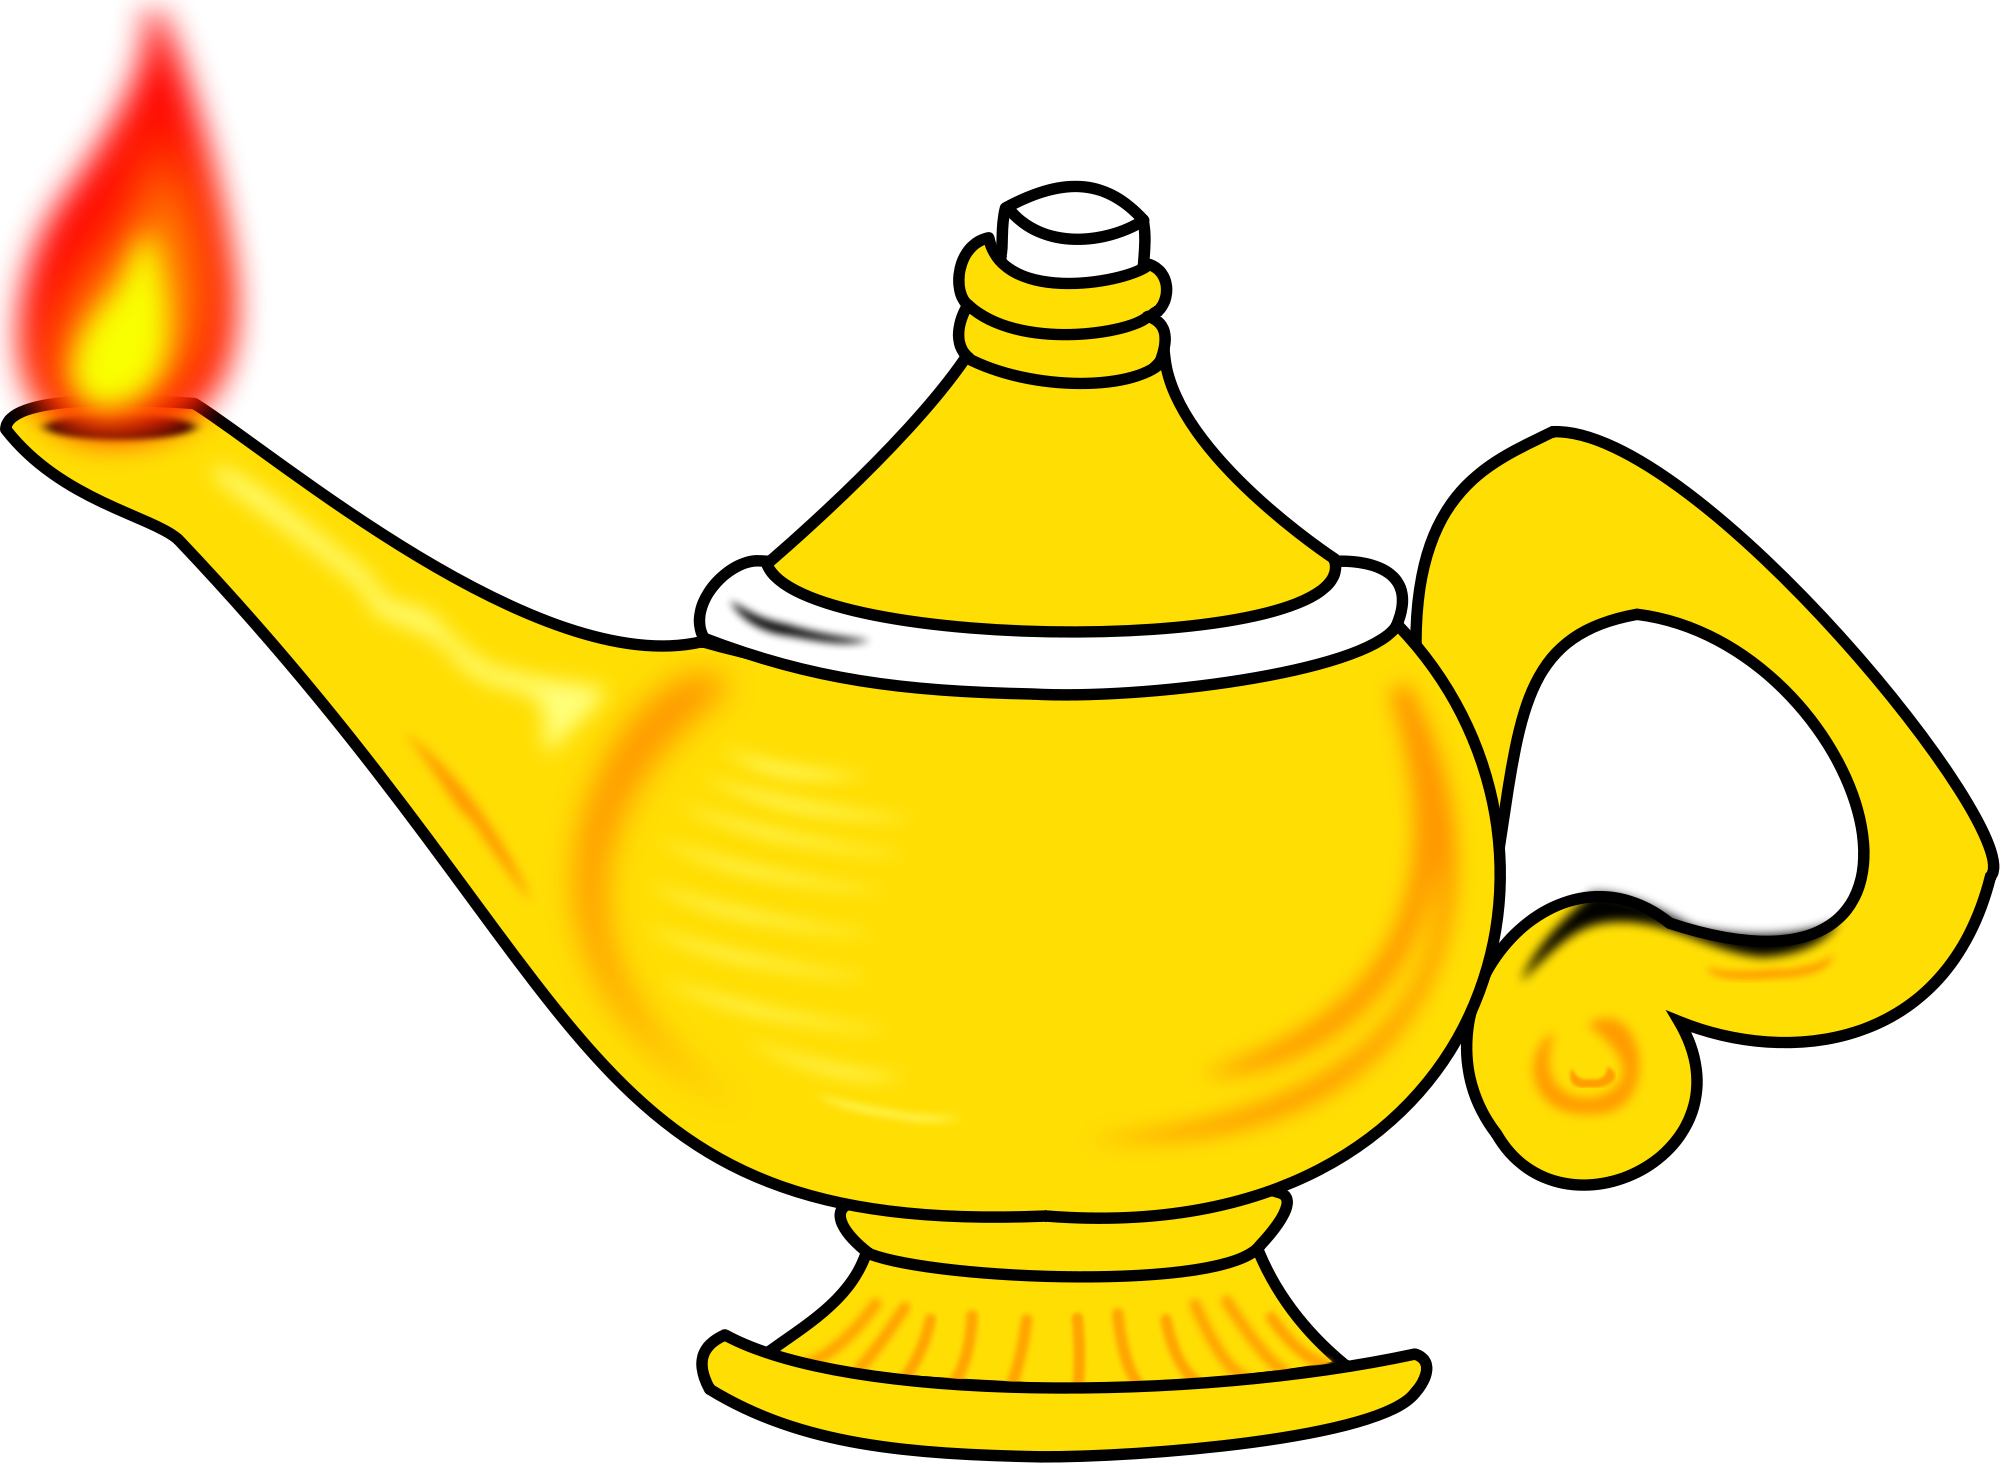 File - Nursing Symbol - Svg - Wikimedia Commons - Cafepress Nursing Lamp 5'x7'area Rug (2000x1463)